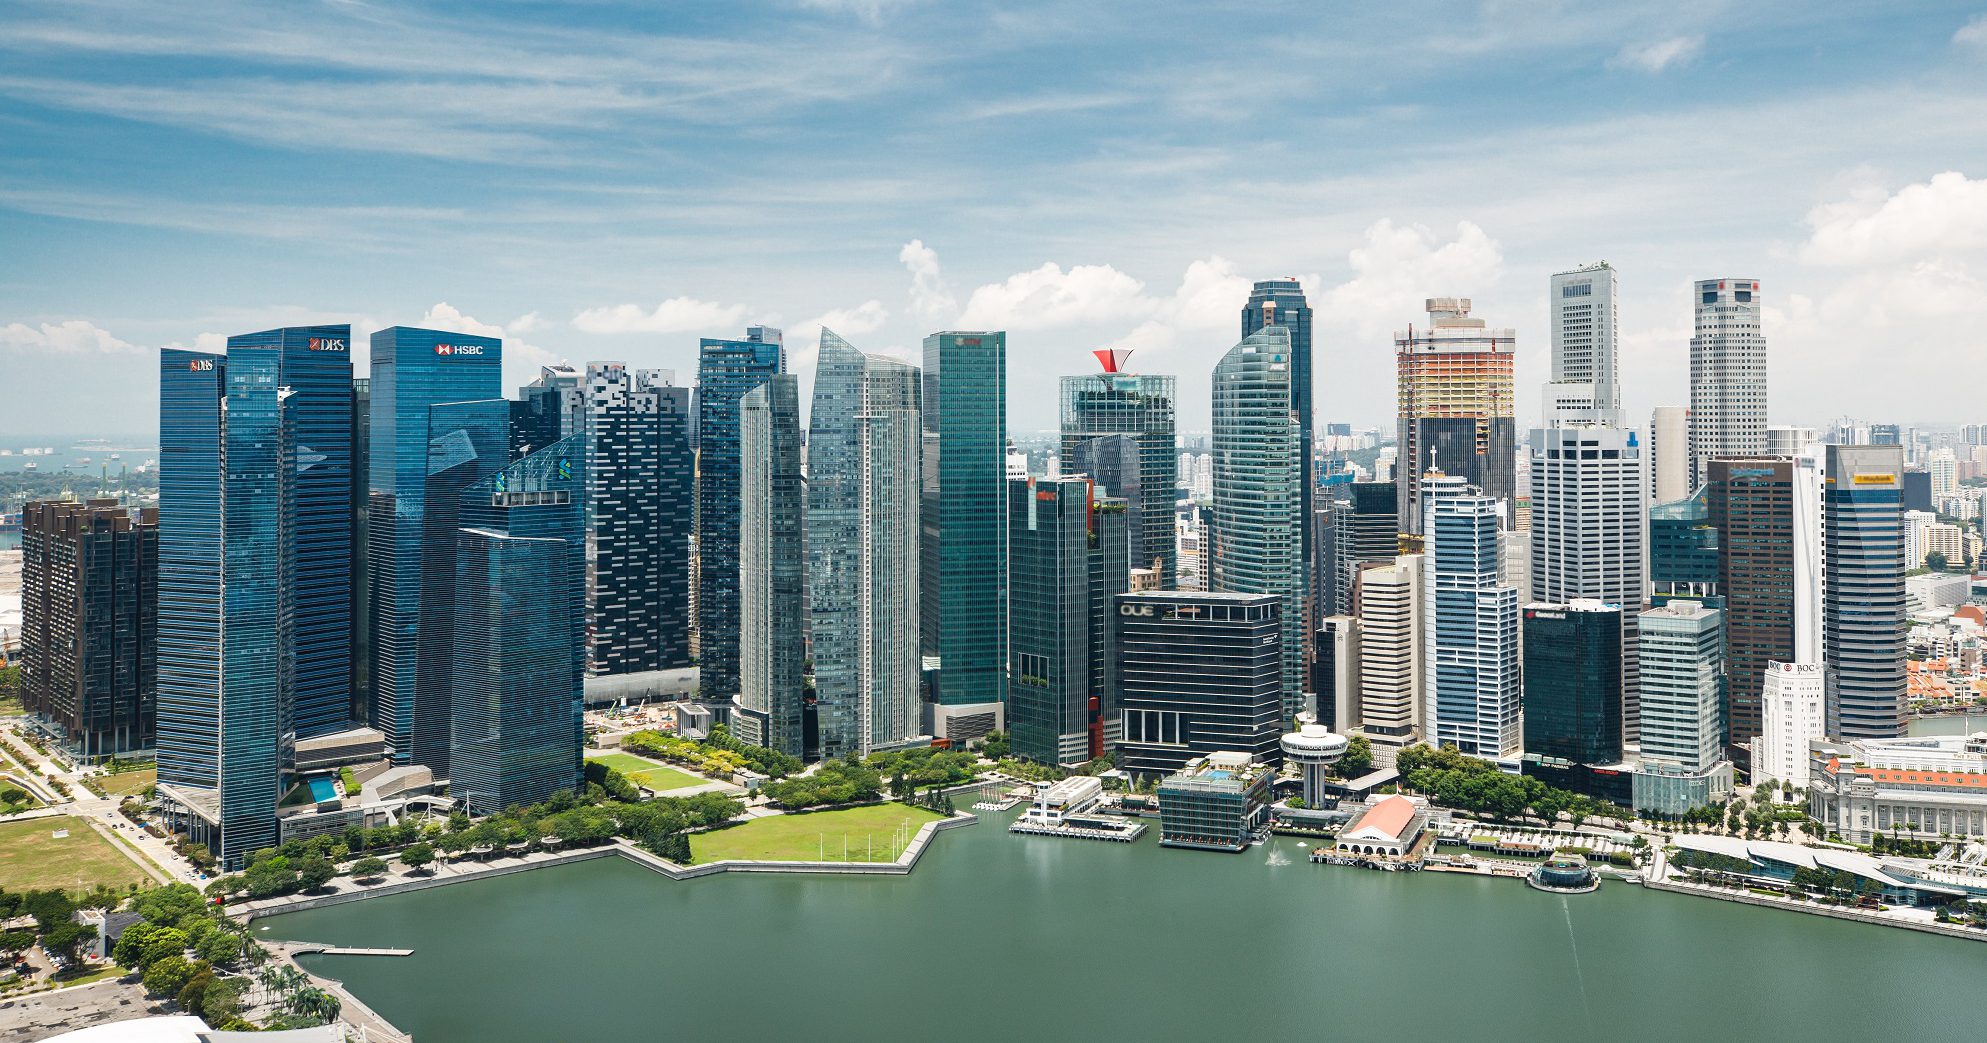 CBD skyline Singapore